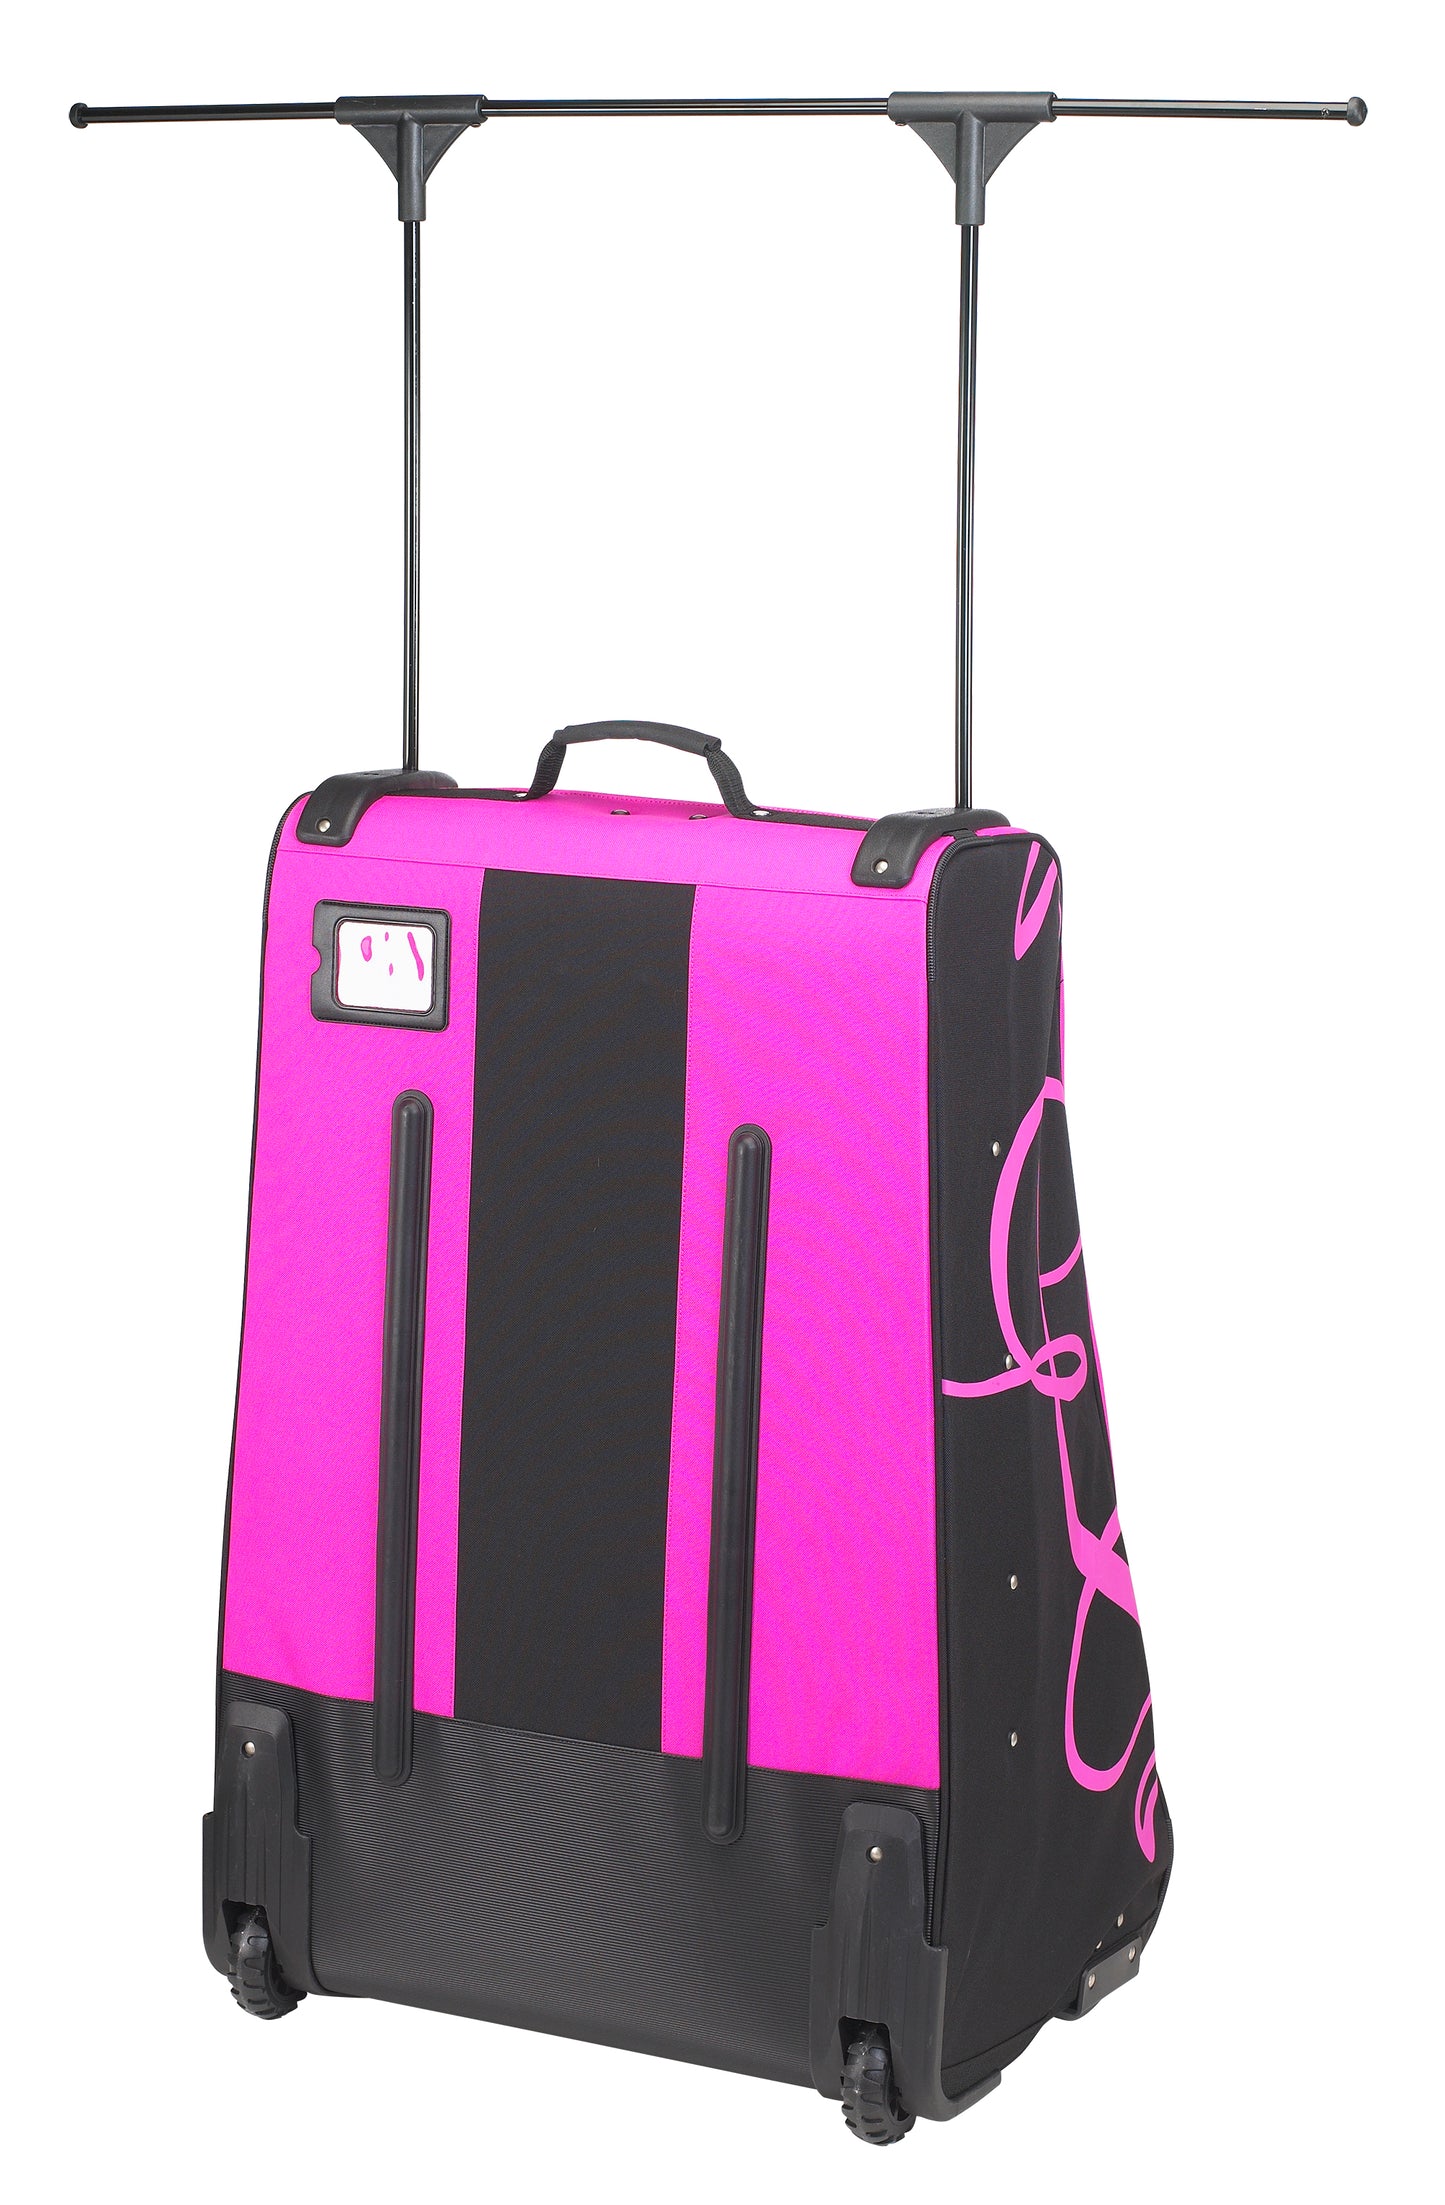 GRIT DT2 Dance Tower + Accessory Pack - Travel Dance Bag